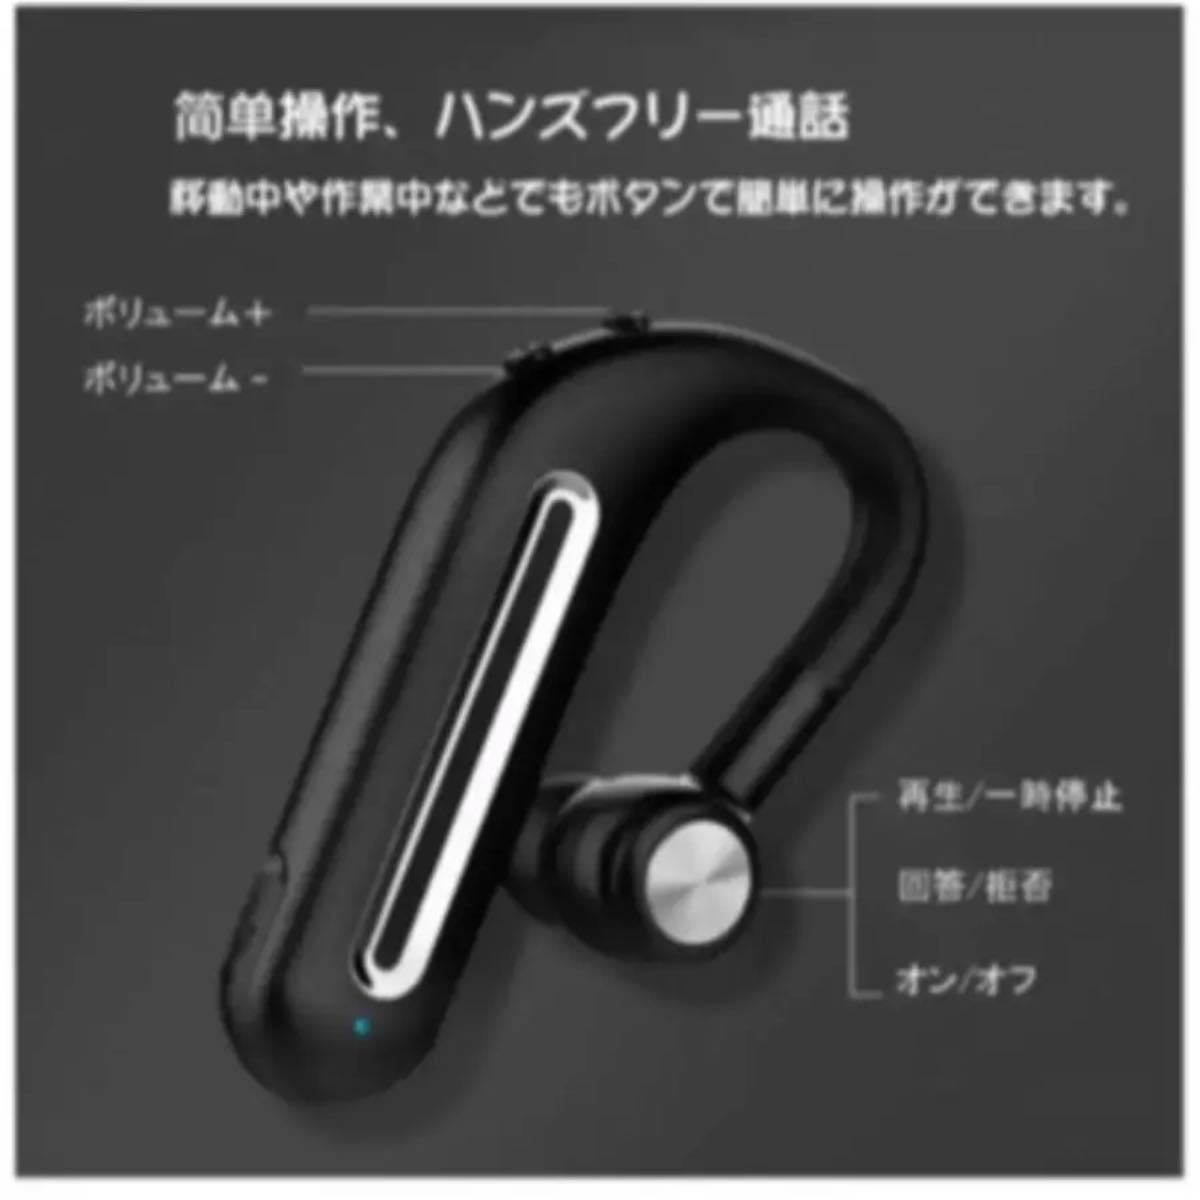  Bluetooth ヘッドセット ワイヤレスイヤホン耳掛け型 超大容量バッテリー長持ちイヤホン片耳 高音質 通話